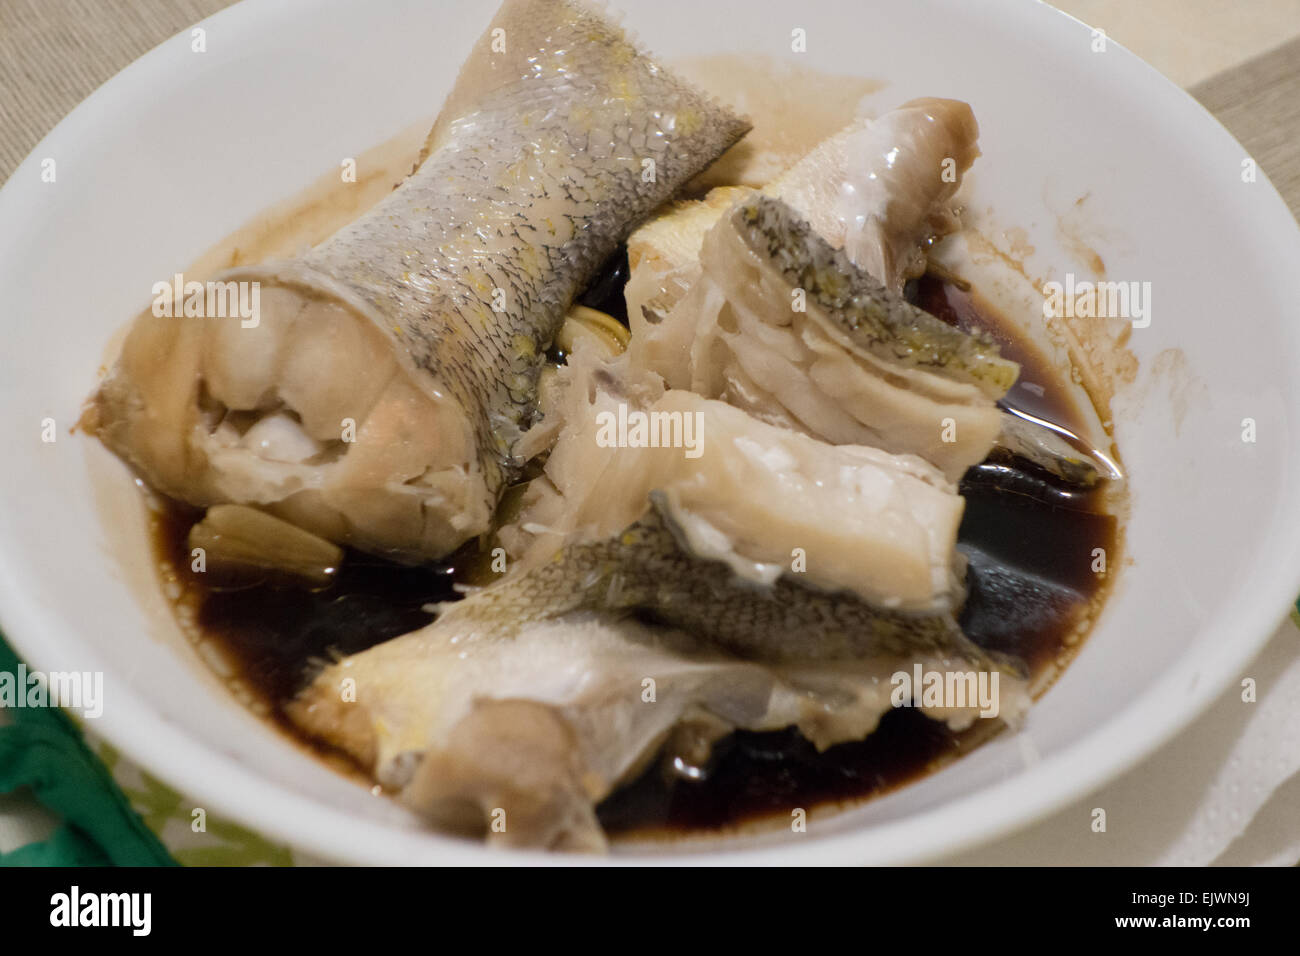 chinese steam fish soya sauce Stock Photo